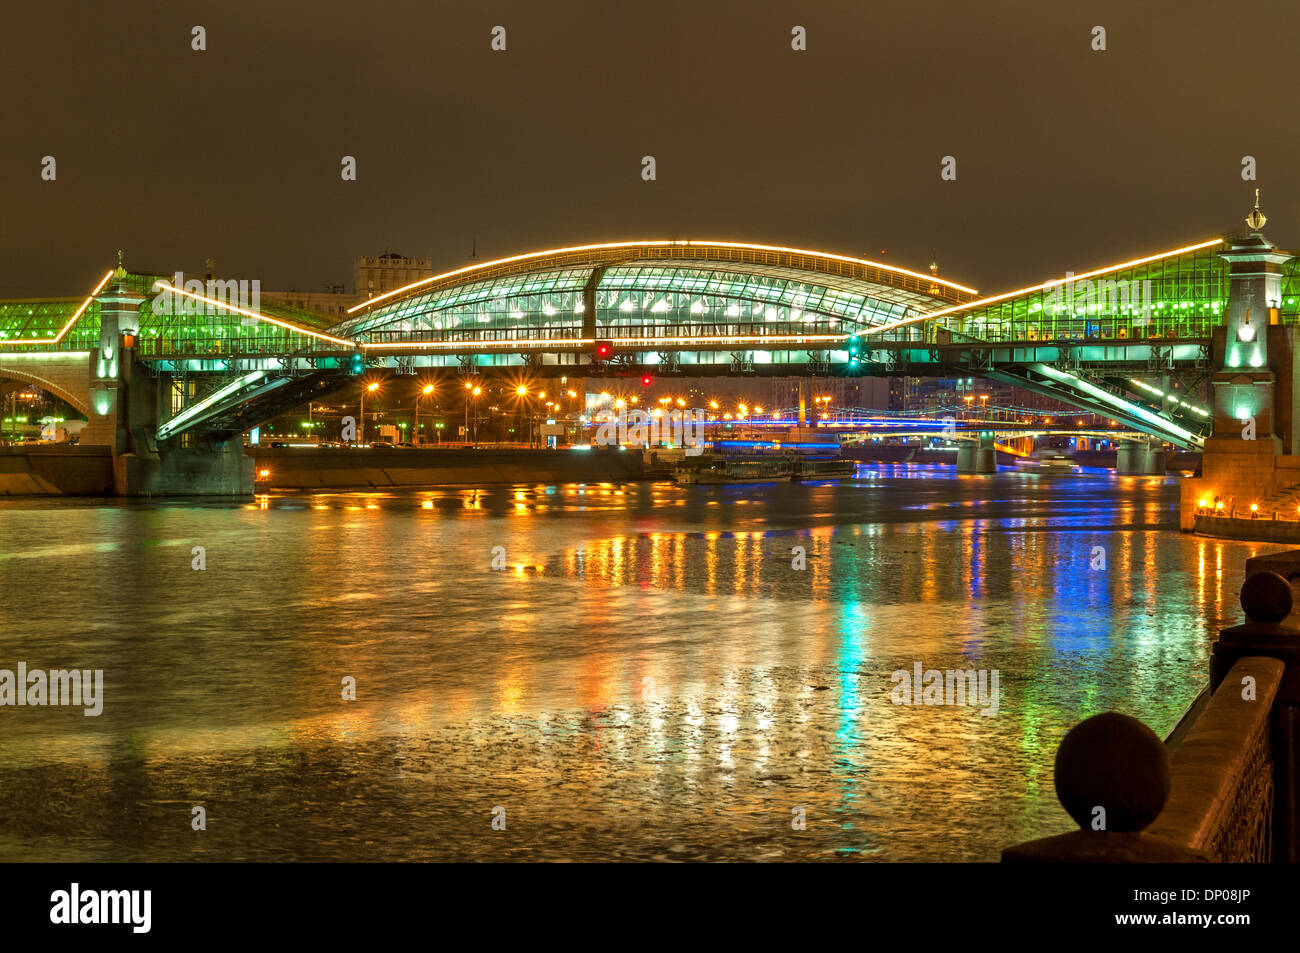 Bogdan Khmelnitsky bridge at night in Moscow. The beautiful pedestrian bridge across the Moscow River. Stock Photo